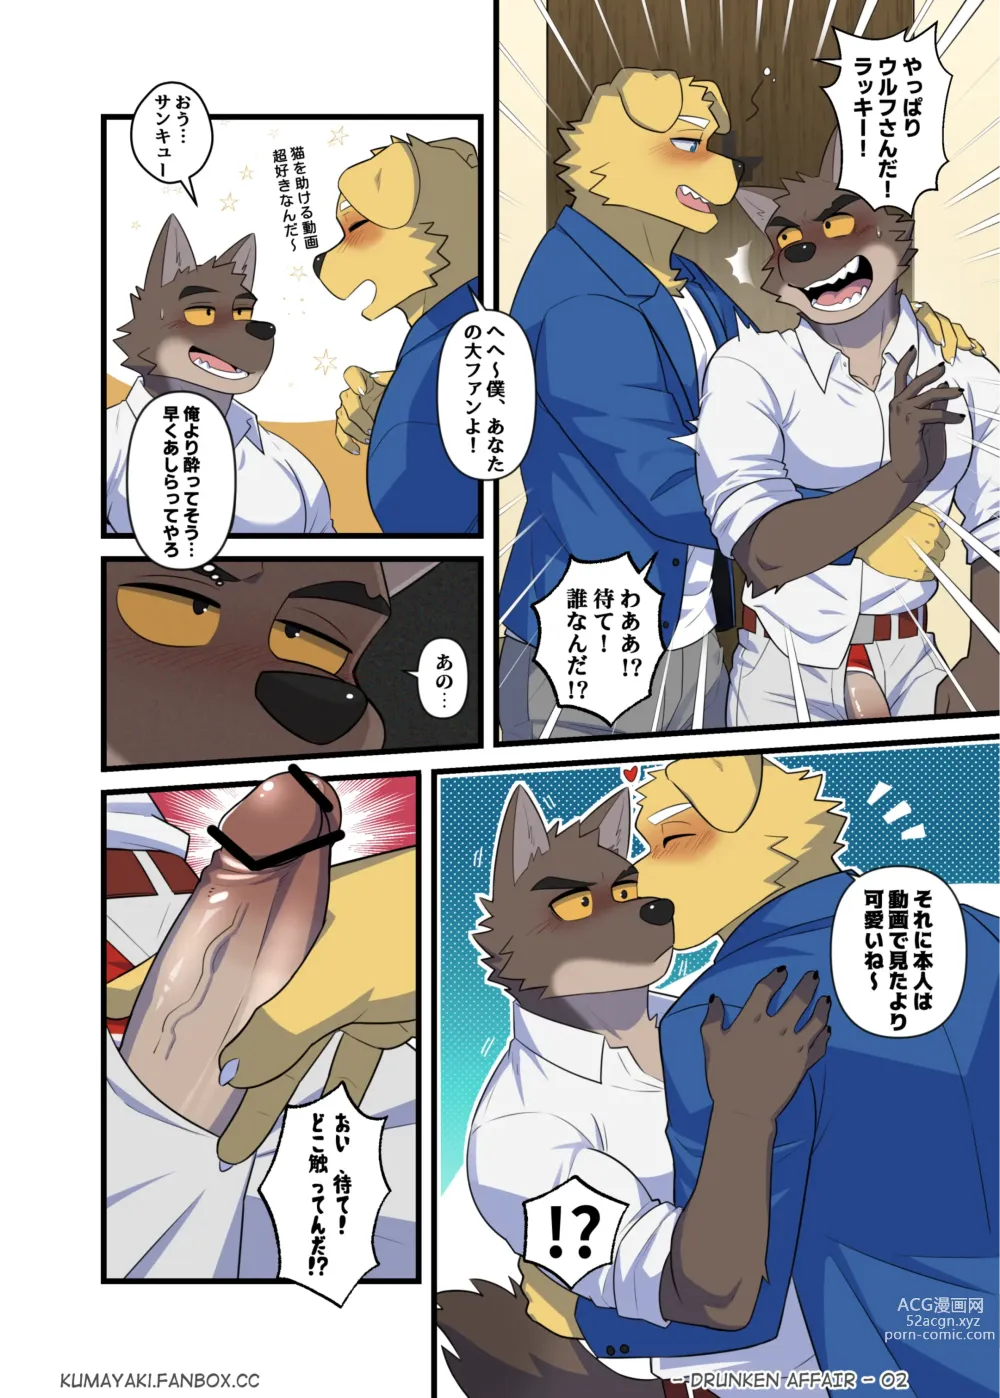 Page 6 of doujinshi Drunken Affair